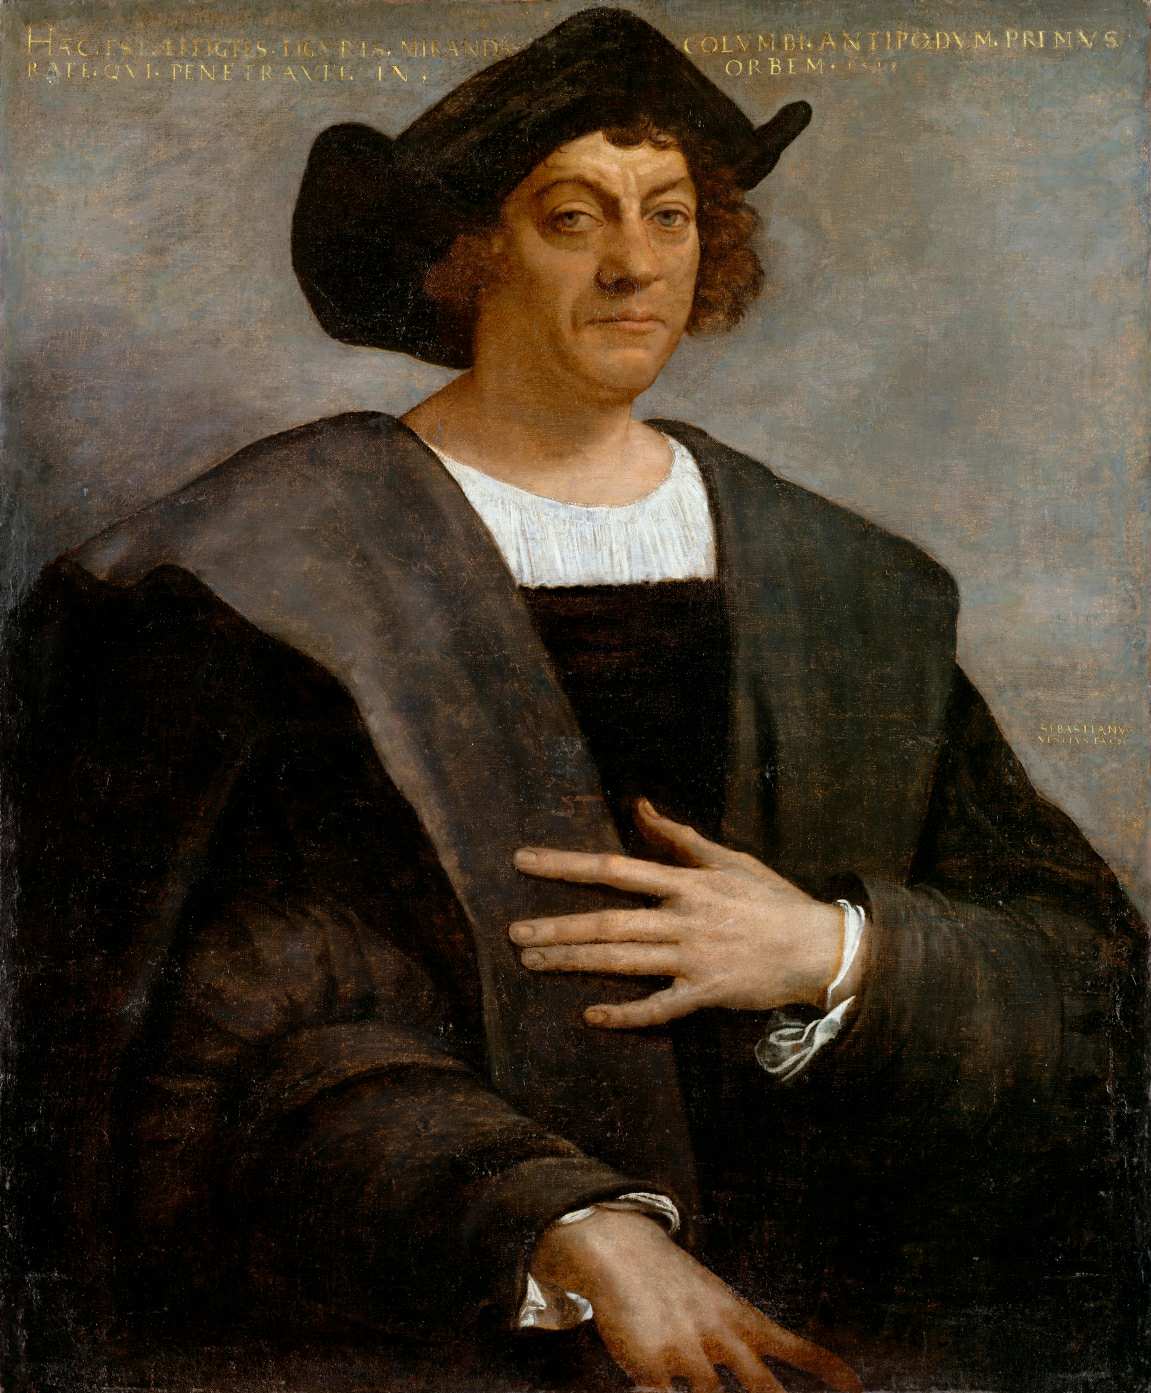 Christopher Columbus, Kensington Runstone